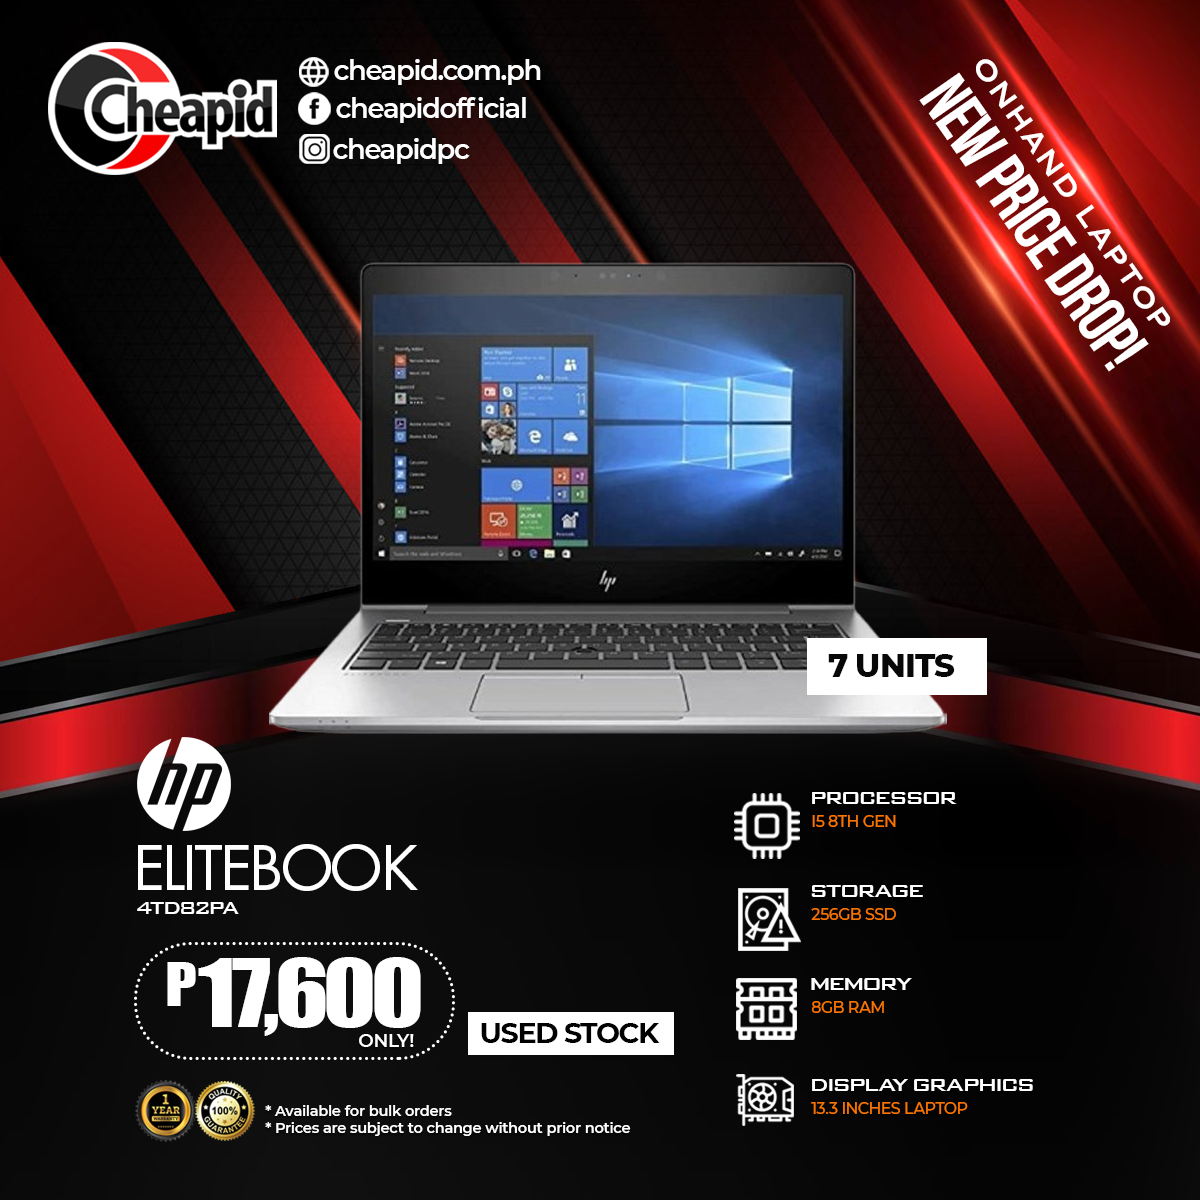 HP Elitebook (Certified Used Stock) Laptop with Intel Core i5 8TH GEN 8GB RAM 256GB SSD (4TD82PA)